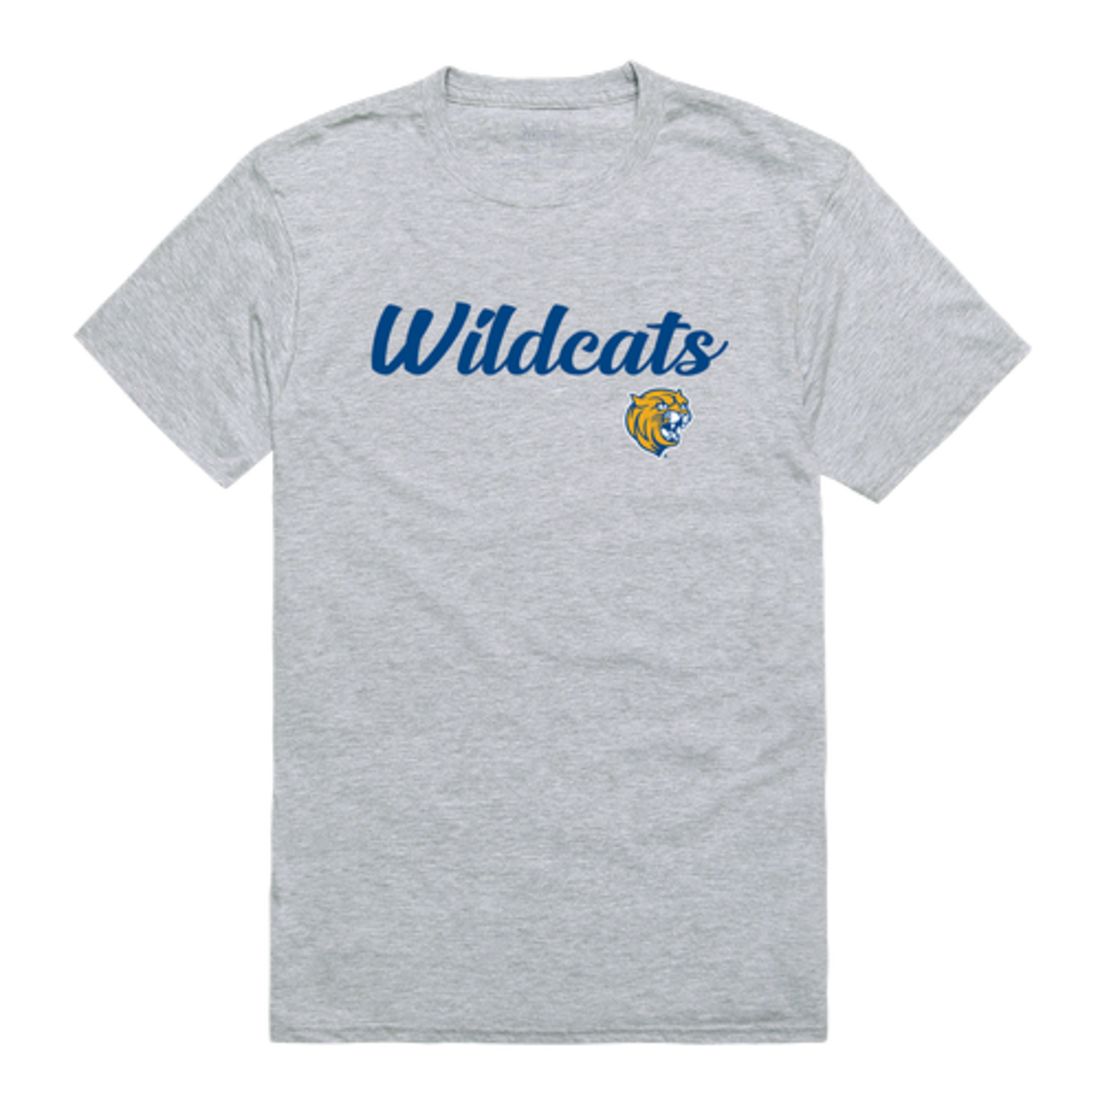 Johnson & Wales University Wildcats Script T-Shirt Tee